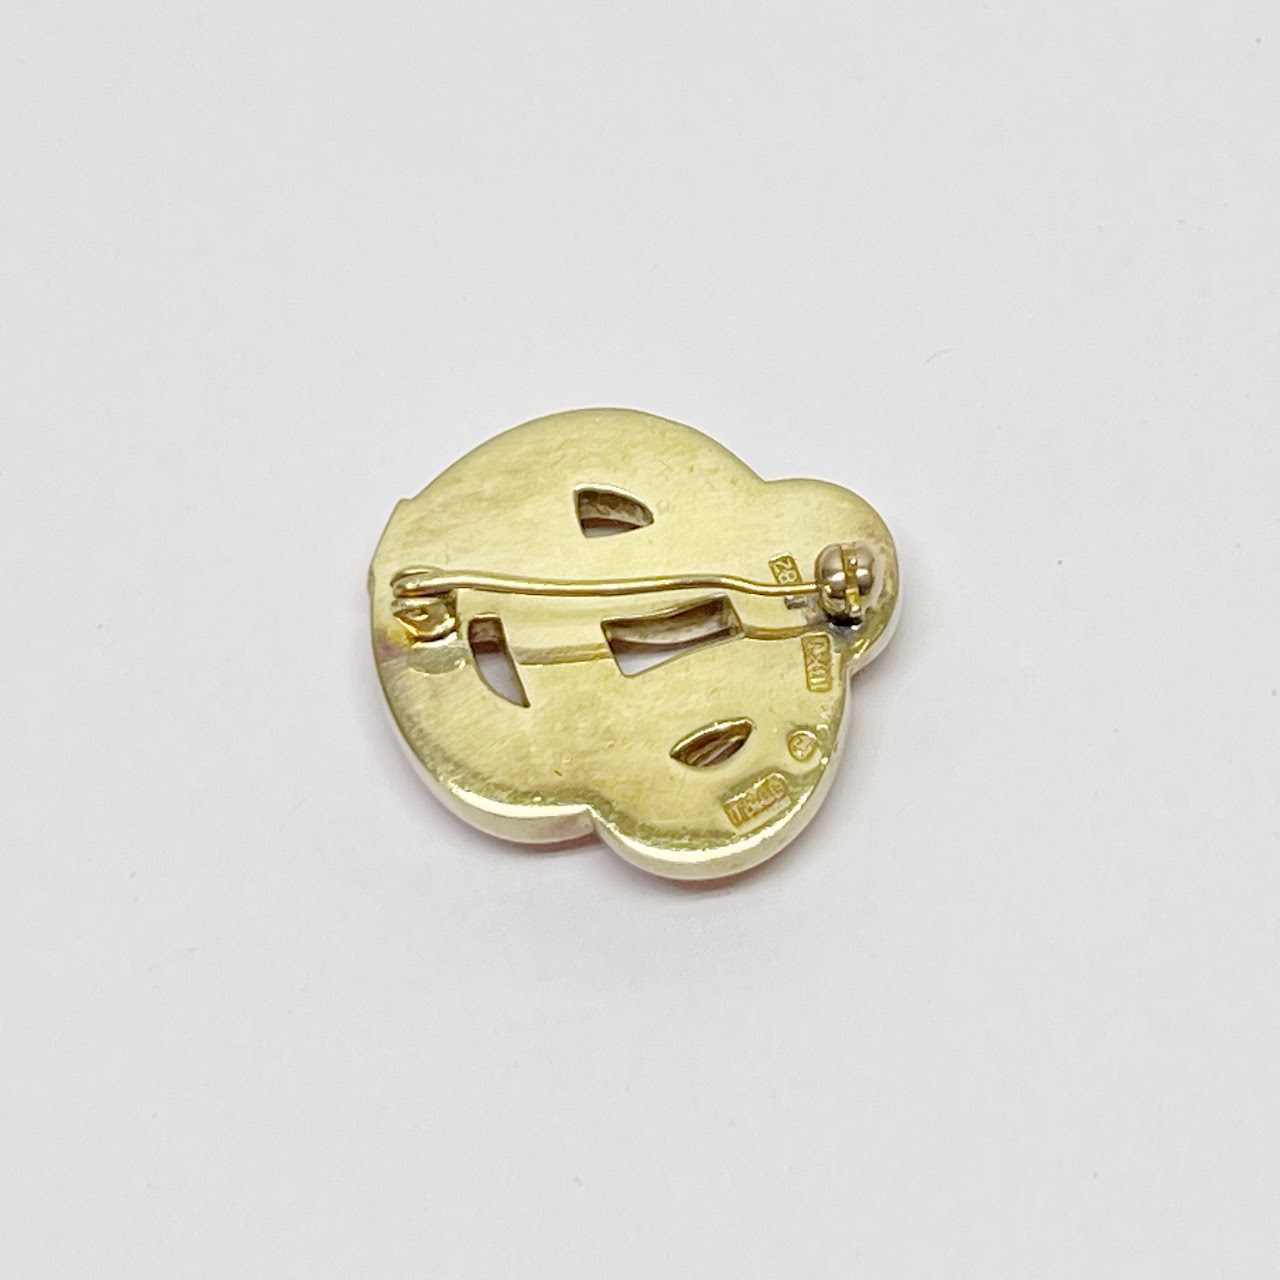 Tiffany & Co. 18K Gold & Coral Brooch